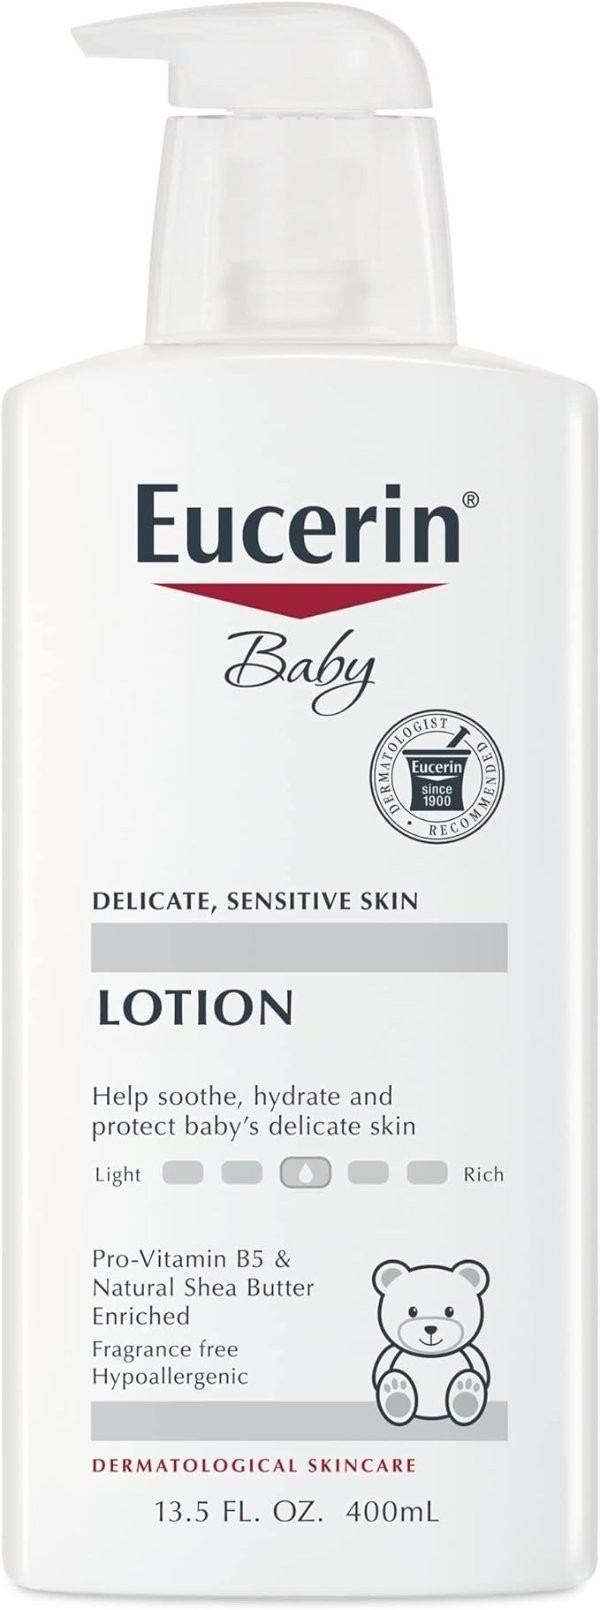 Baby Body Lotion - Hypoallergenic & Fragrance Free, Safe for Everyday Use on Sensitive Skin - 13.5 fl. oz. Pump Bottle